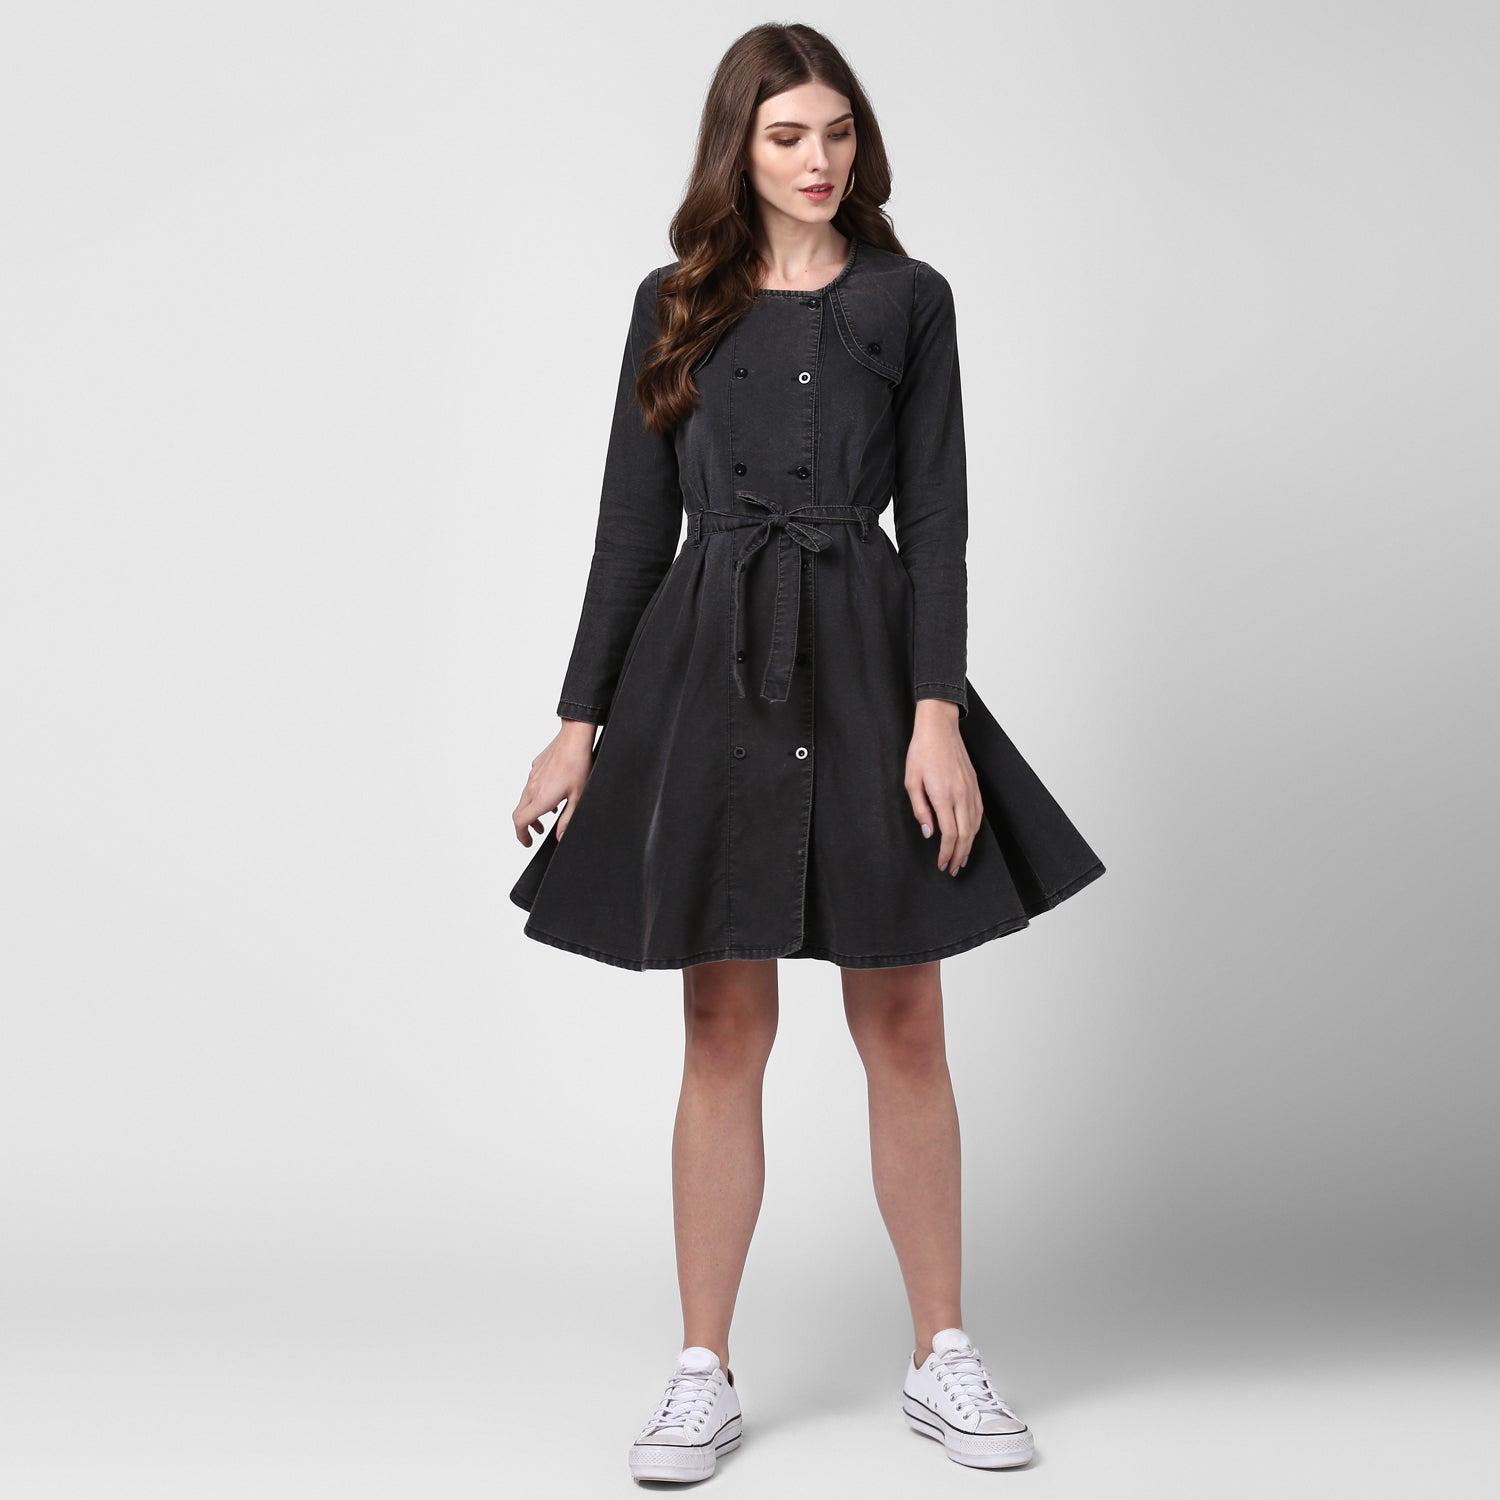 Women's Black Denim Dress with Shoulder Placket detail - StyleStone